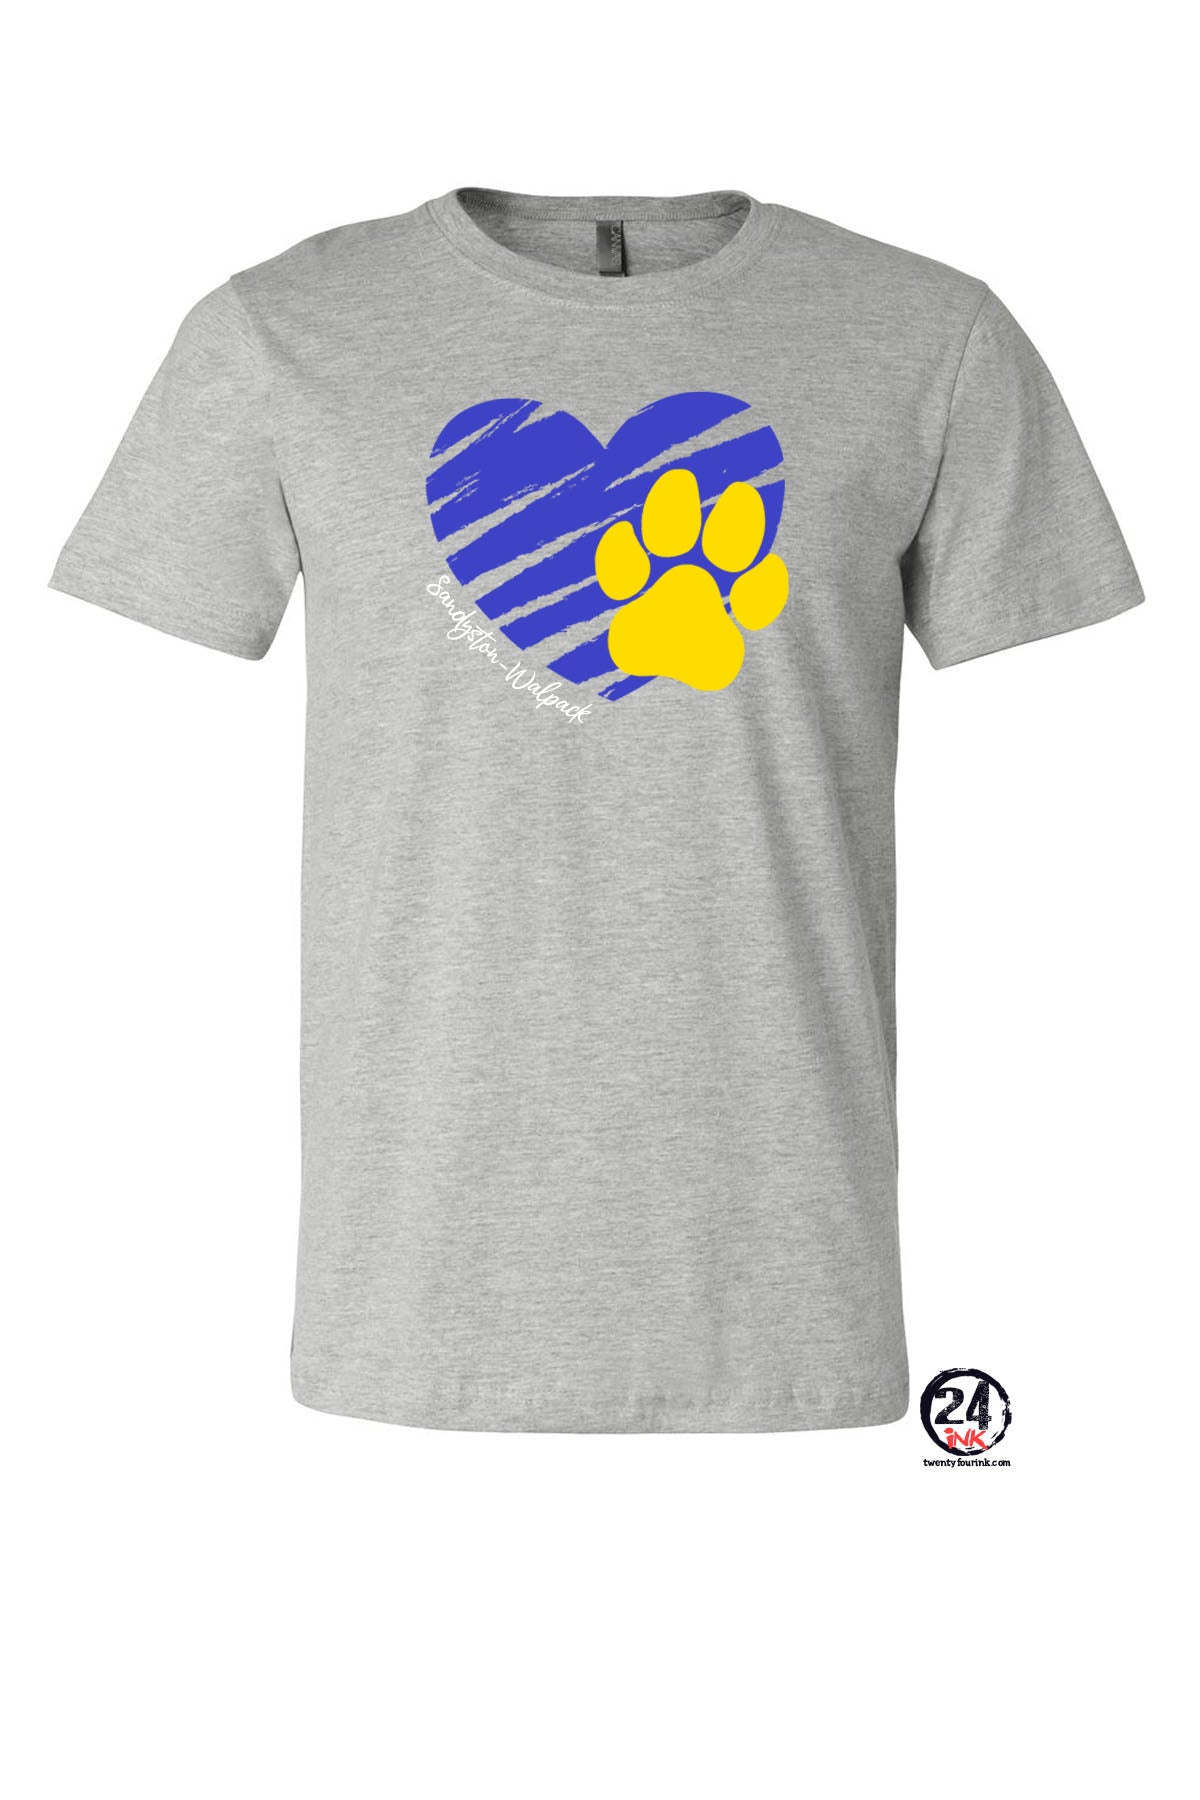 Heart for Sandyston Walpack T-Shirt